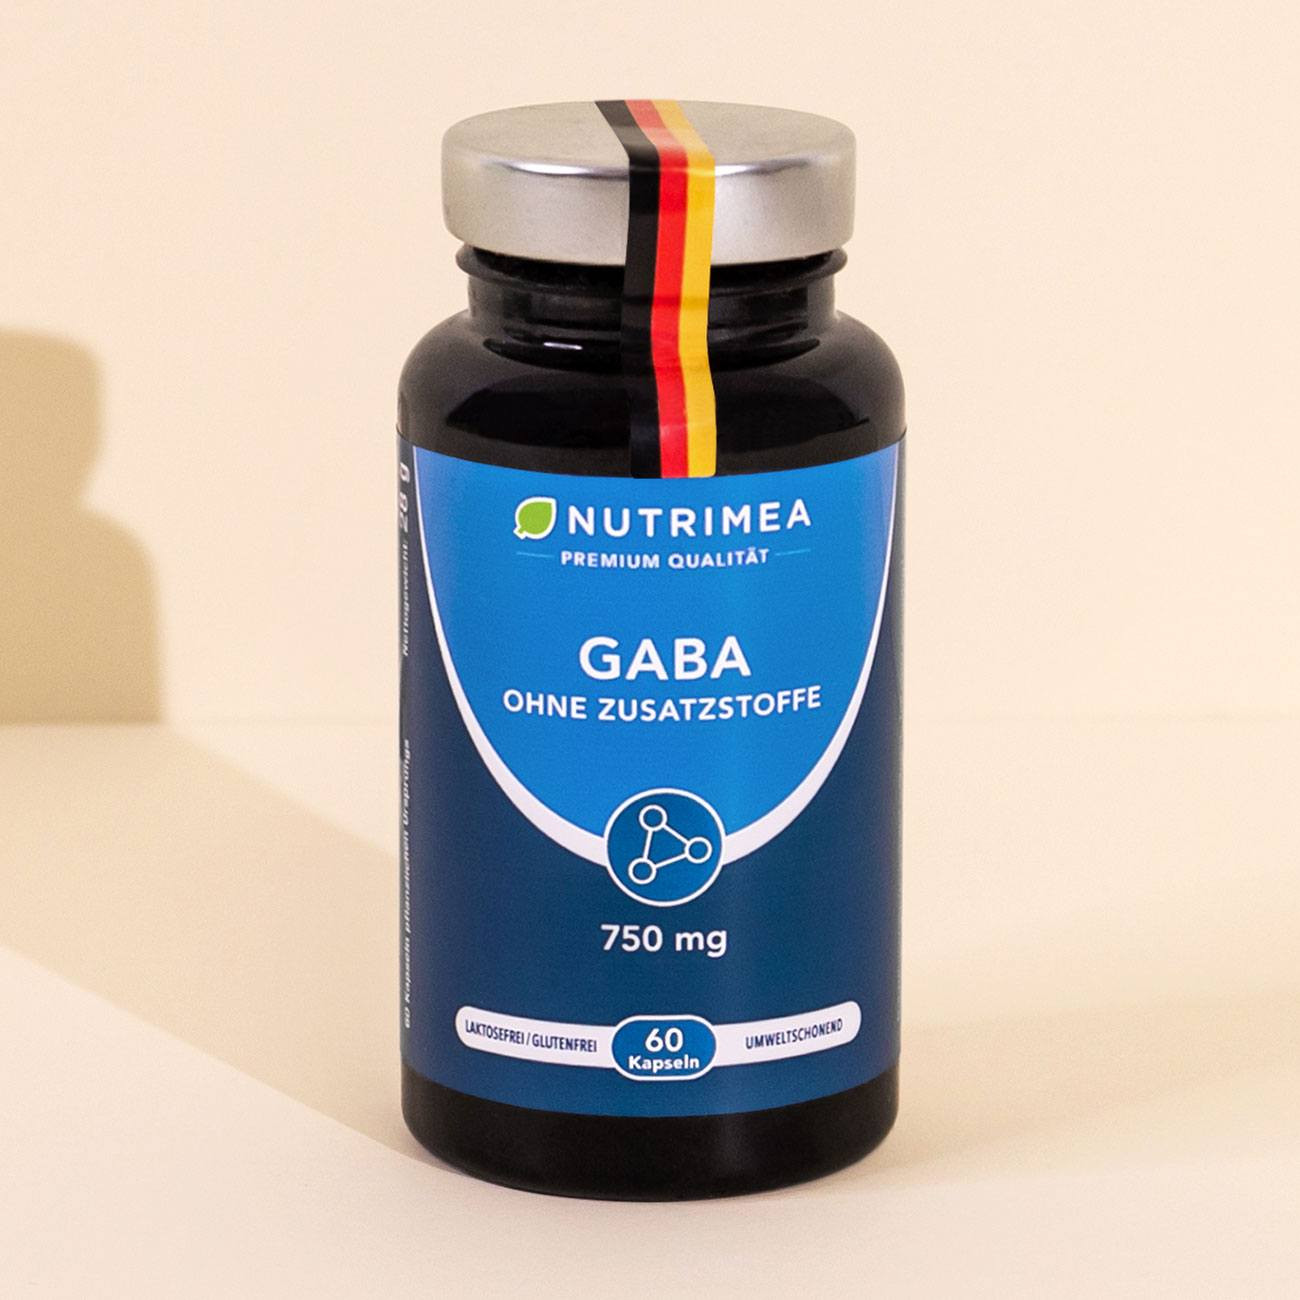 Bild des Nahrungsergänzungsmittels GABA